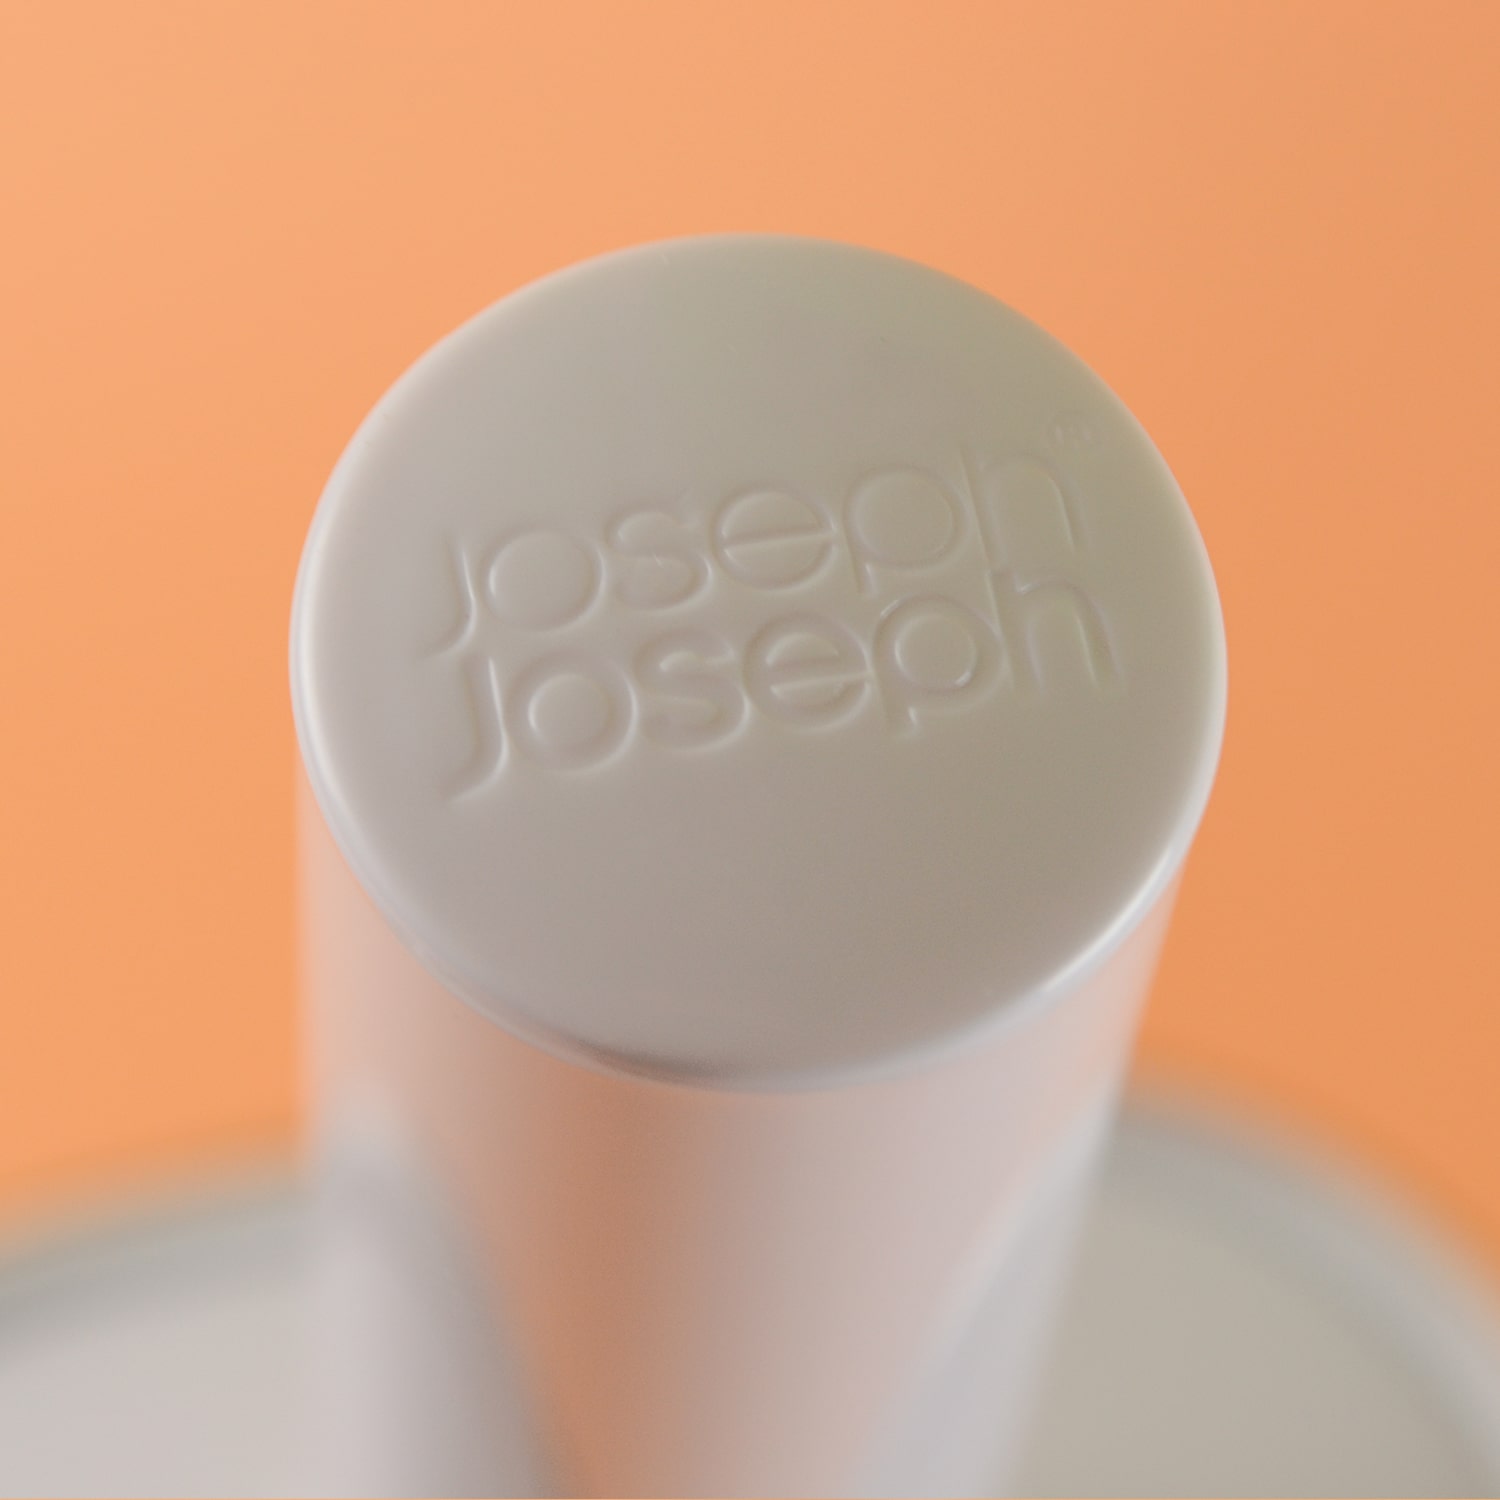 Joseph Joseph EasyStore